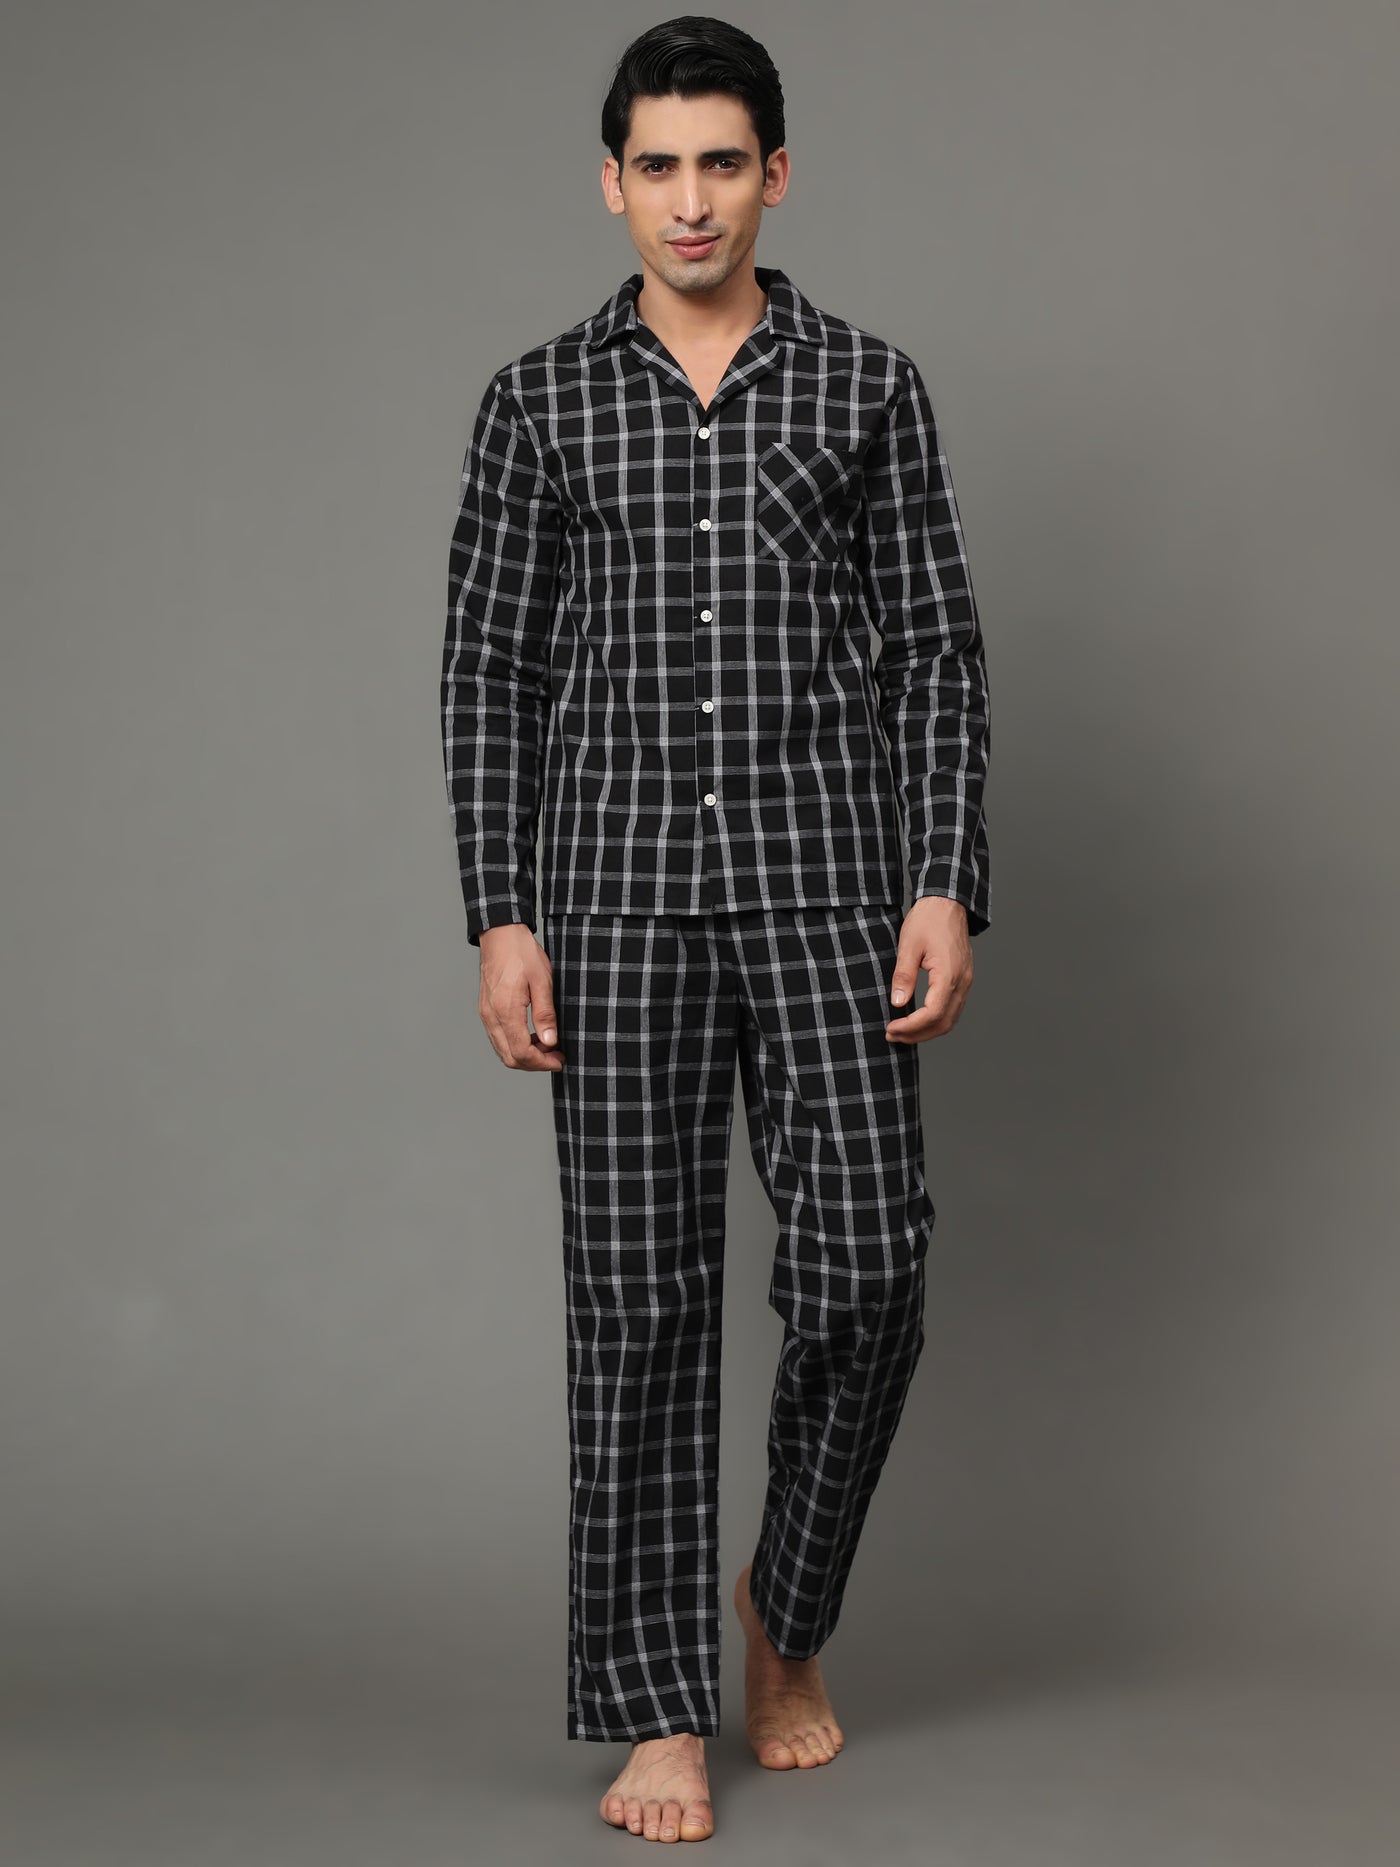 Pyjama Set for Men-Black Checked